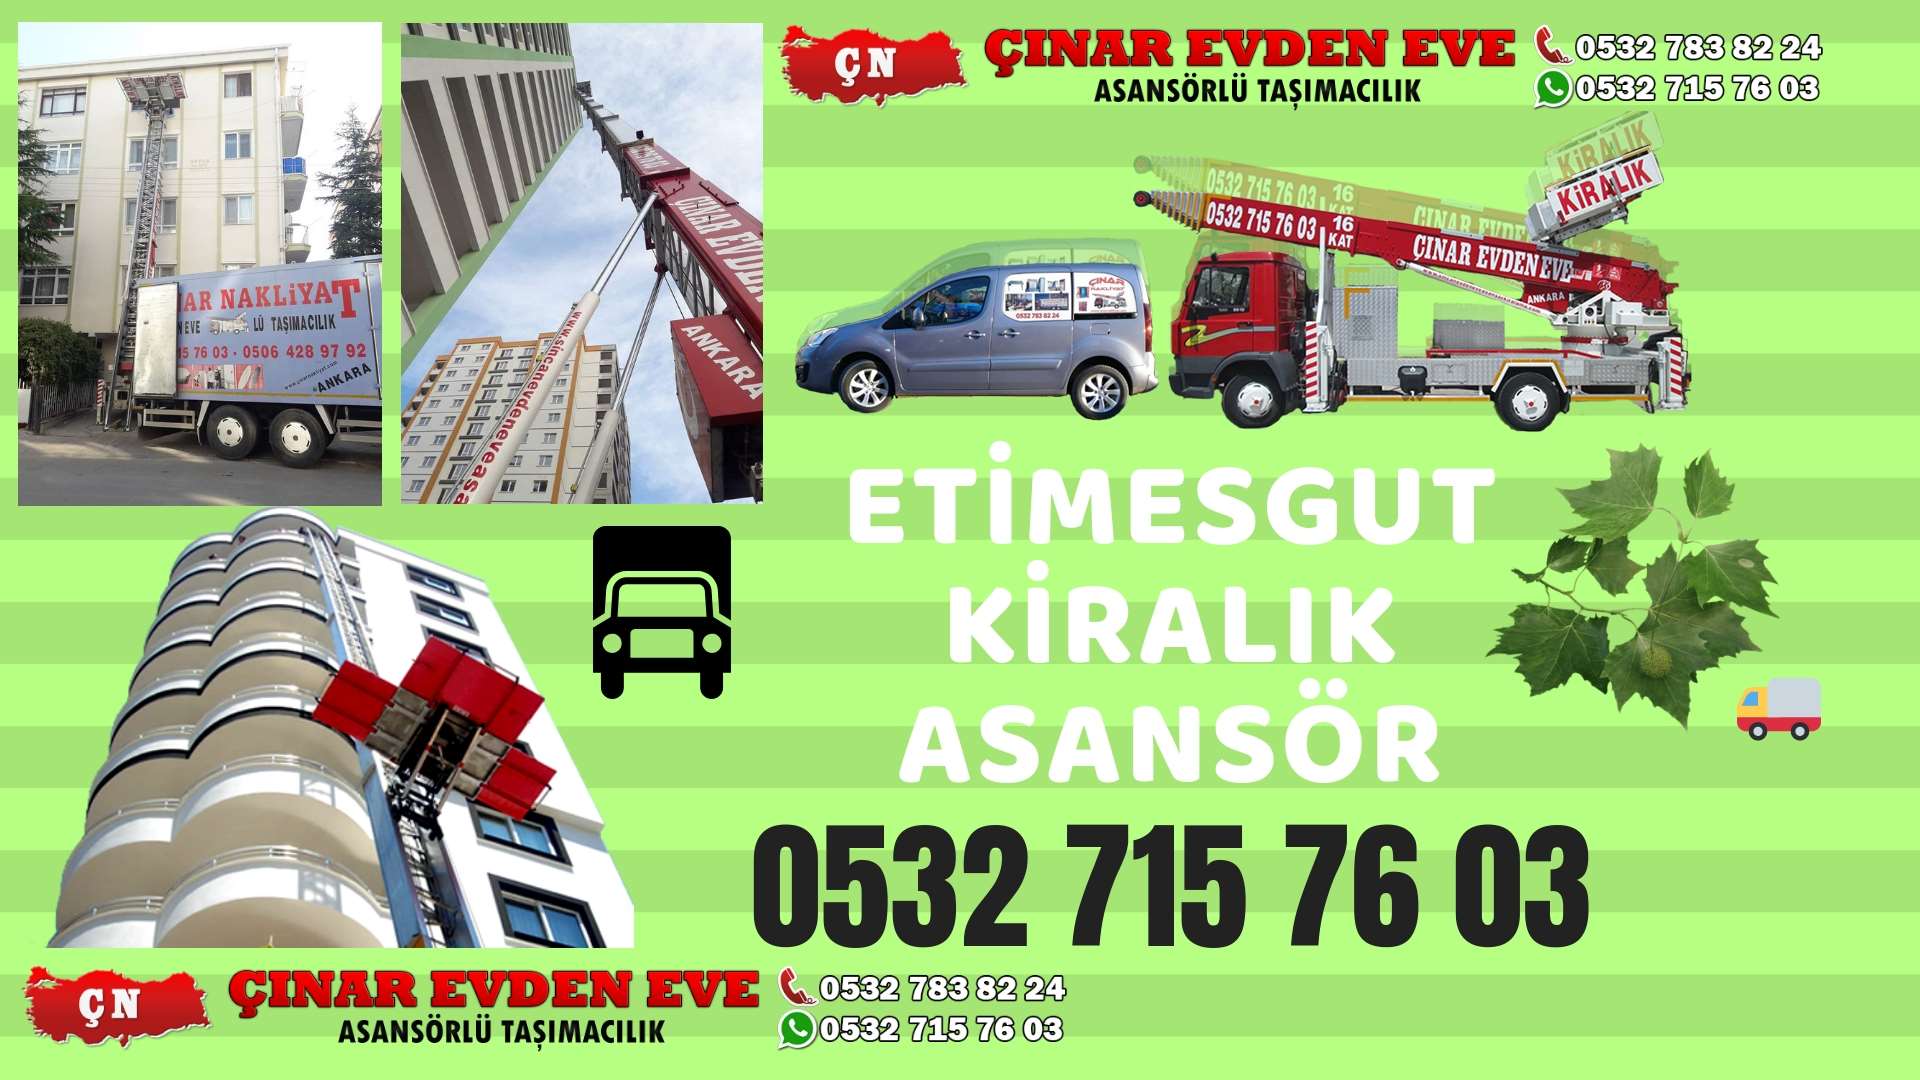 Ankara Çubuk Ev taşıma asansörü kiralama ankara 0532 715 76 03